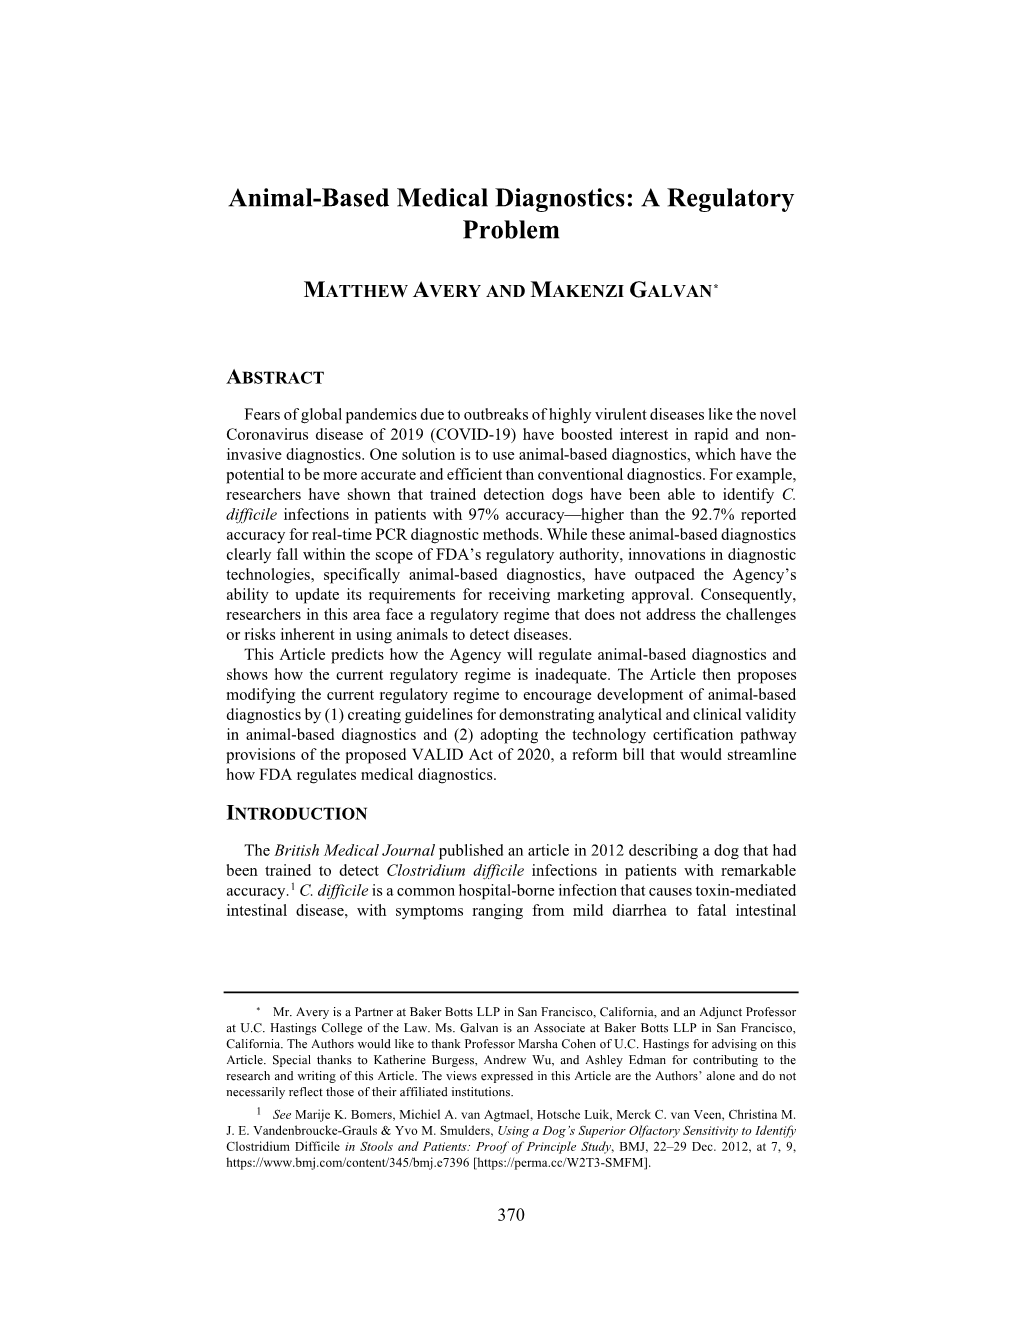 Animal-Based Medical Diagnostics: a Regulatory Problem